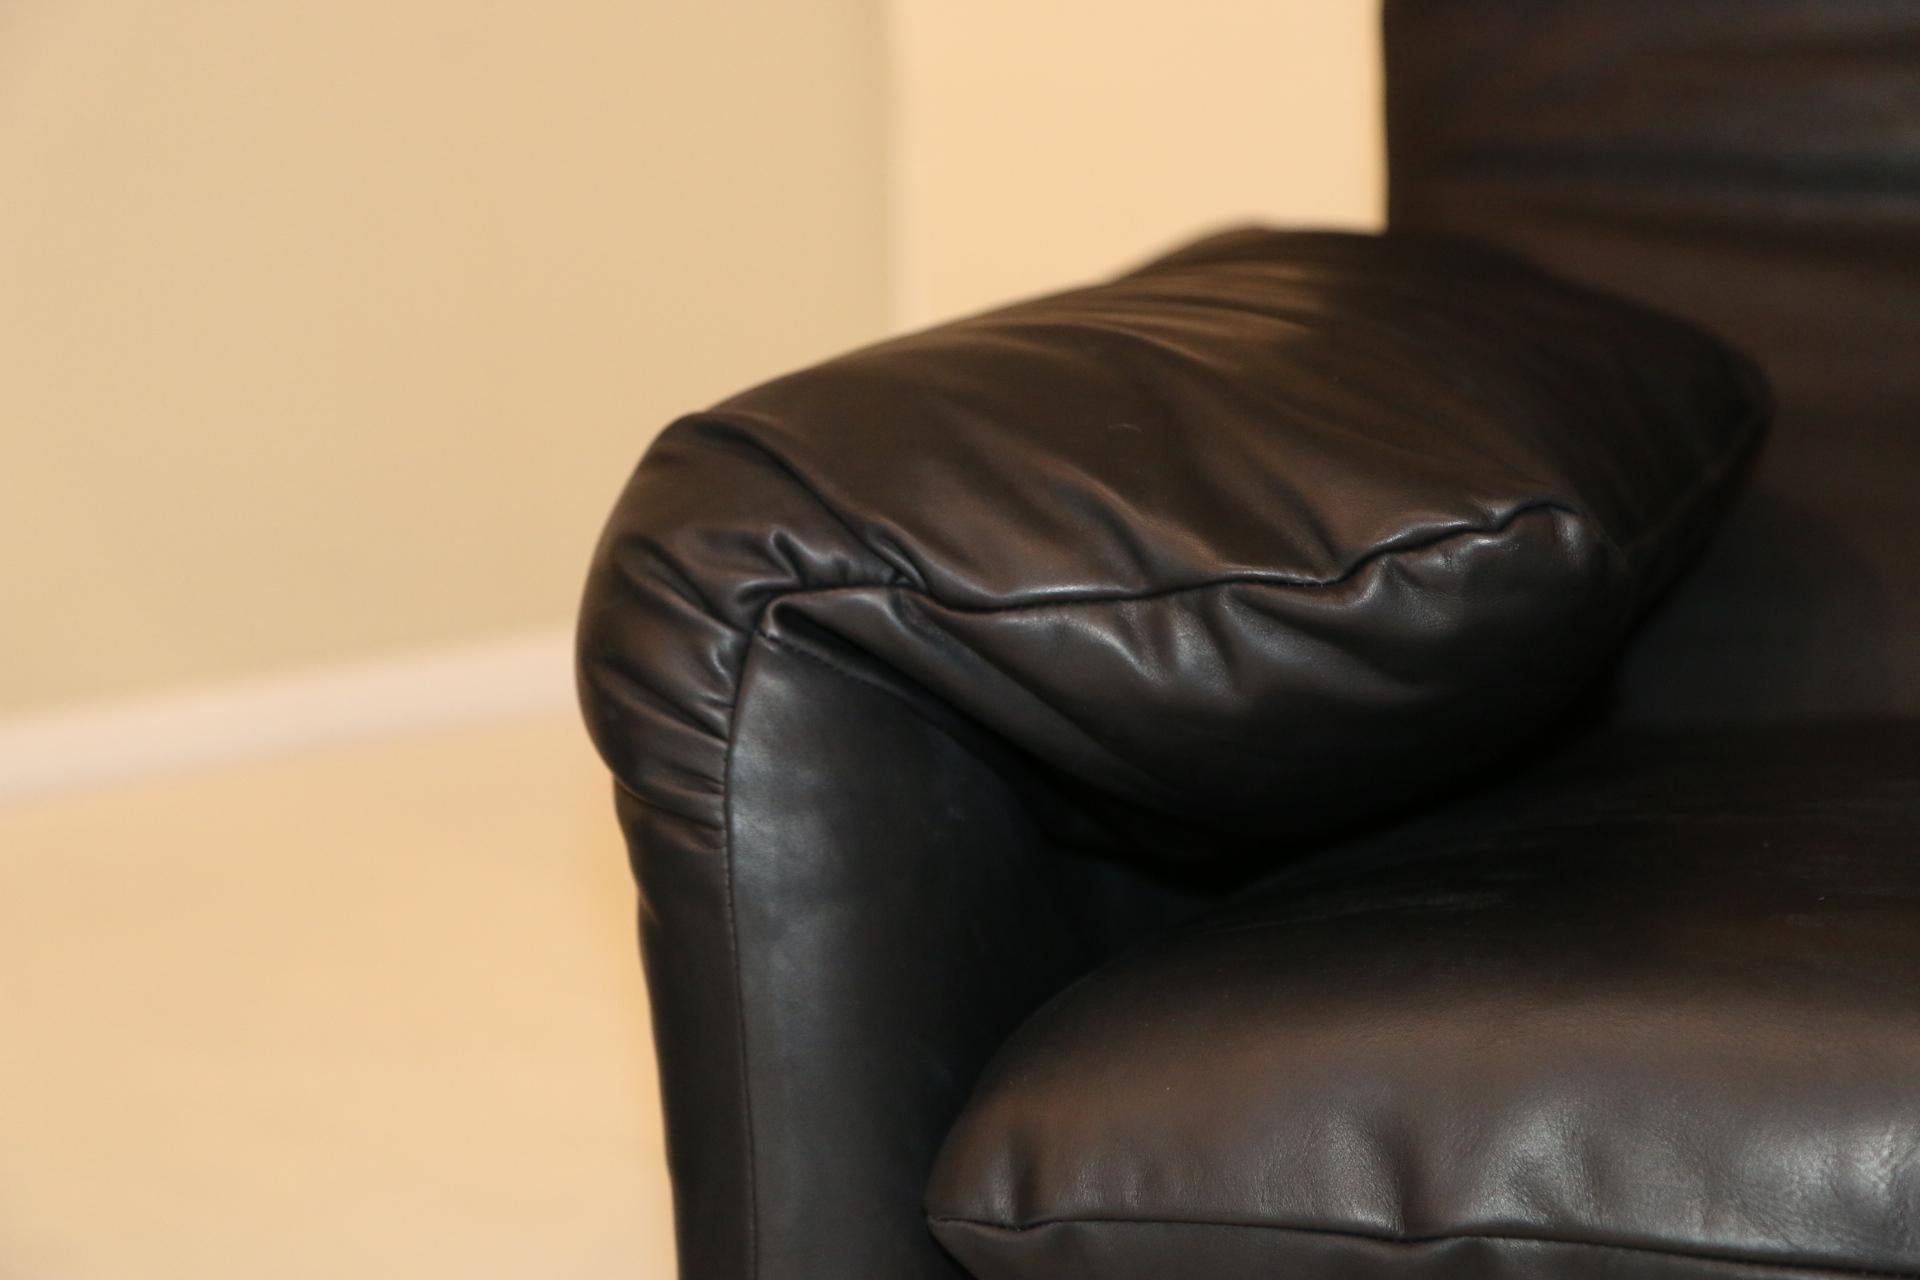 Three-Seat Black Leather Sofa 